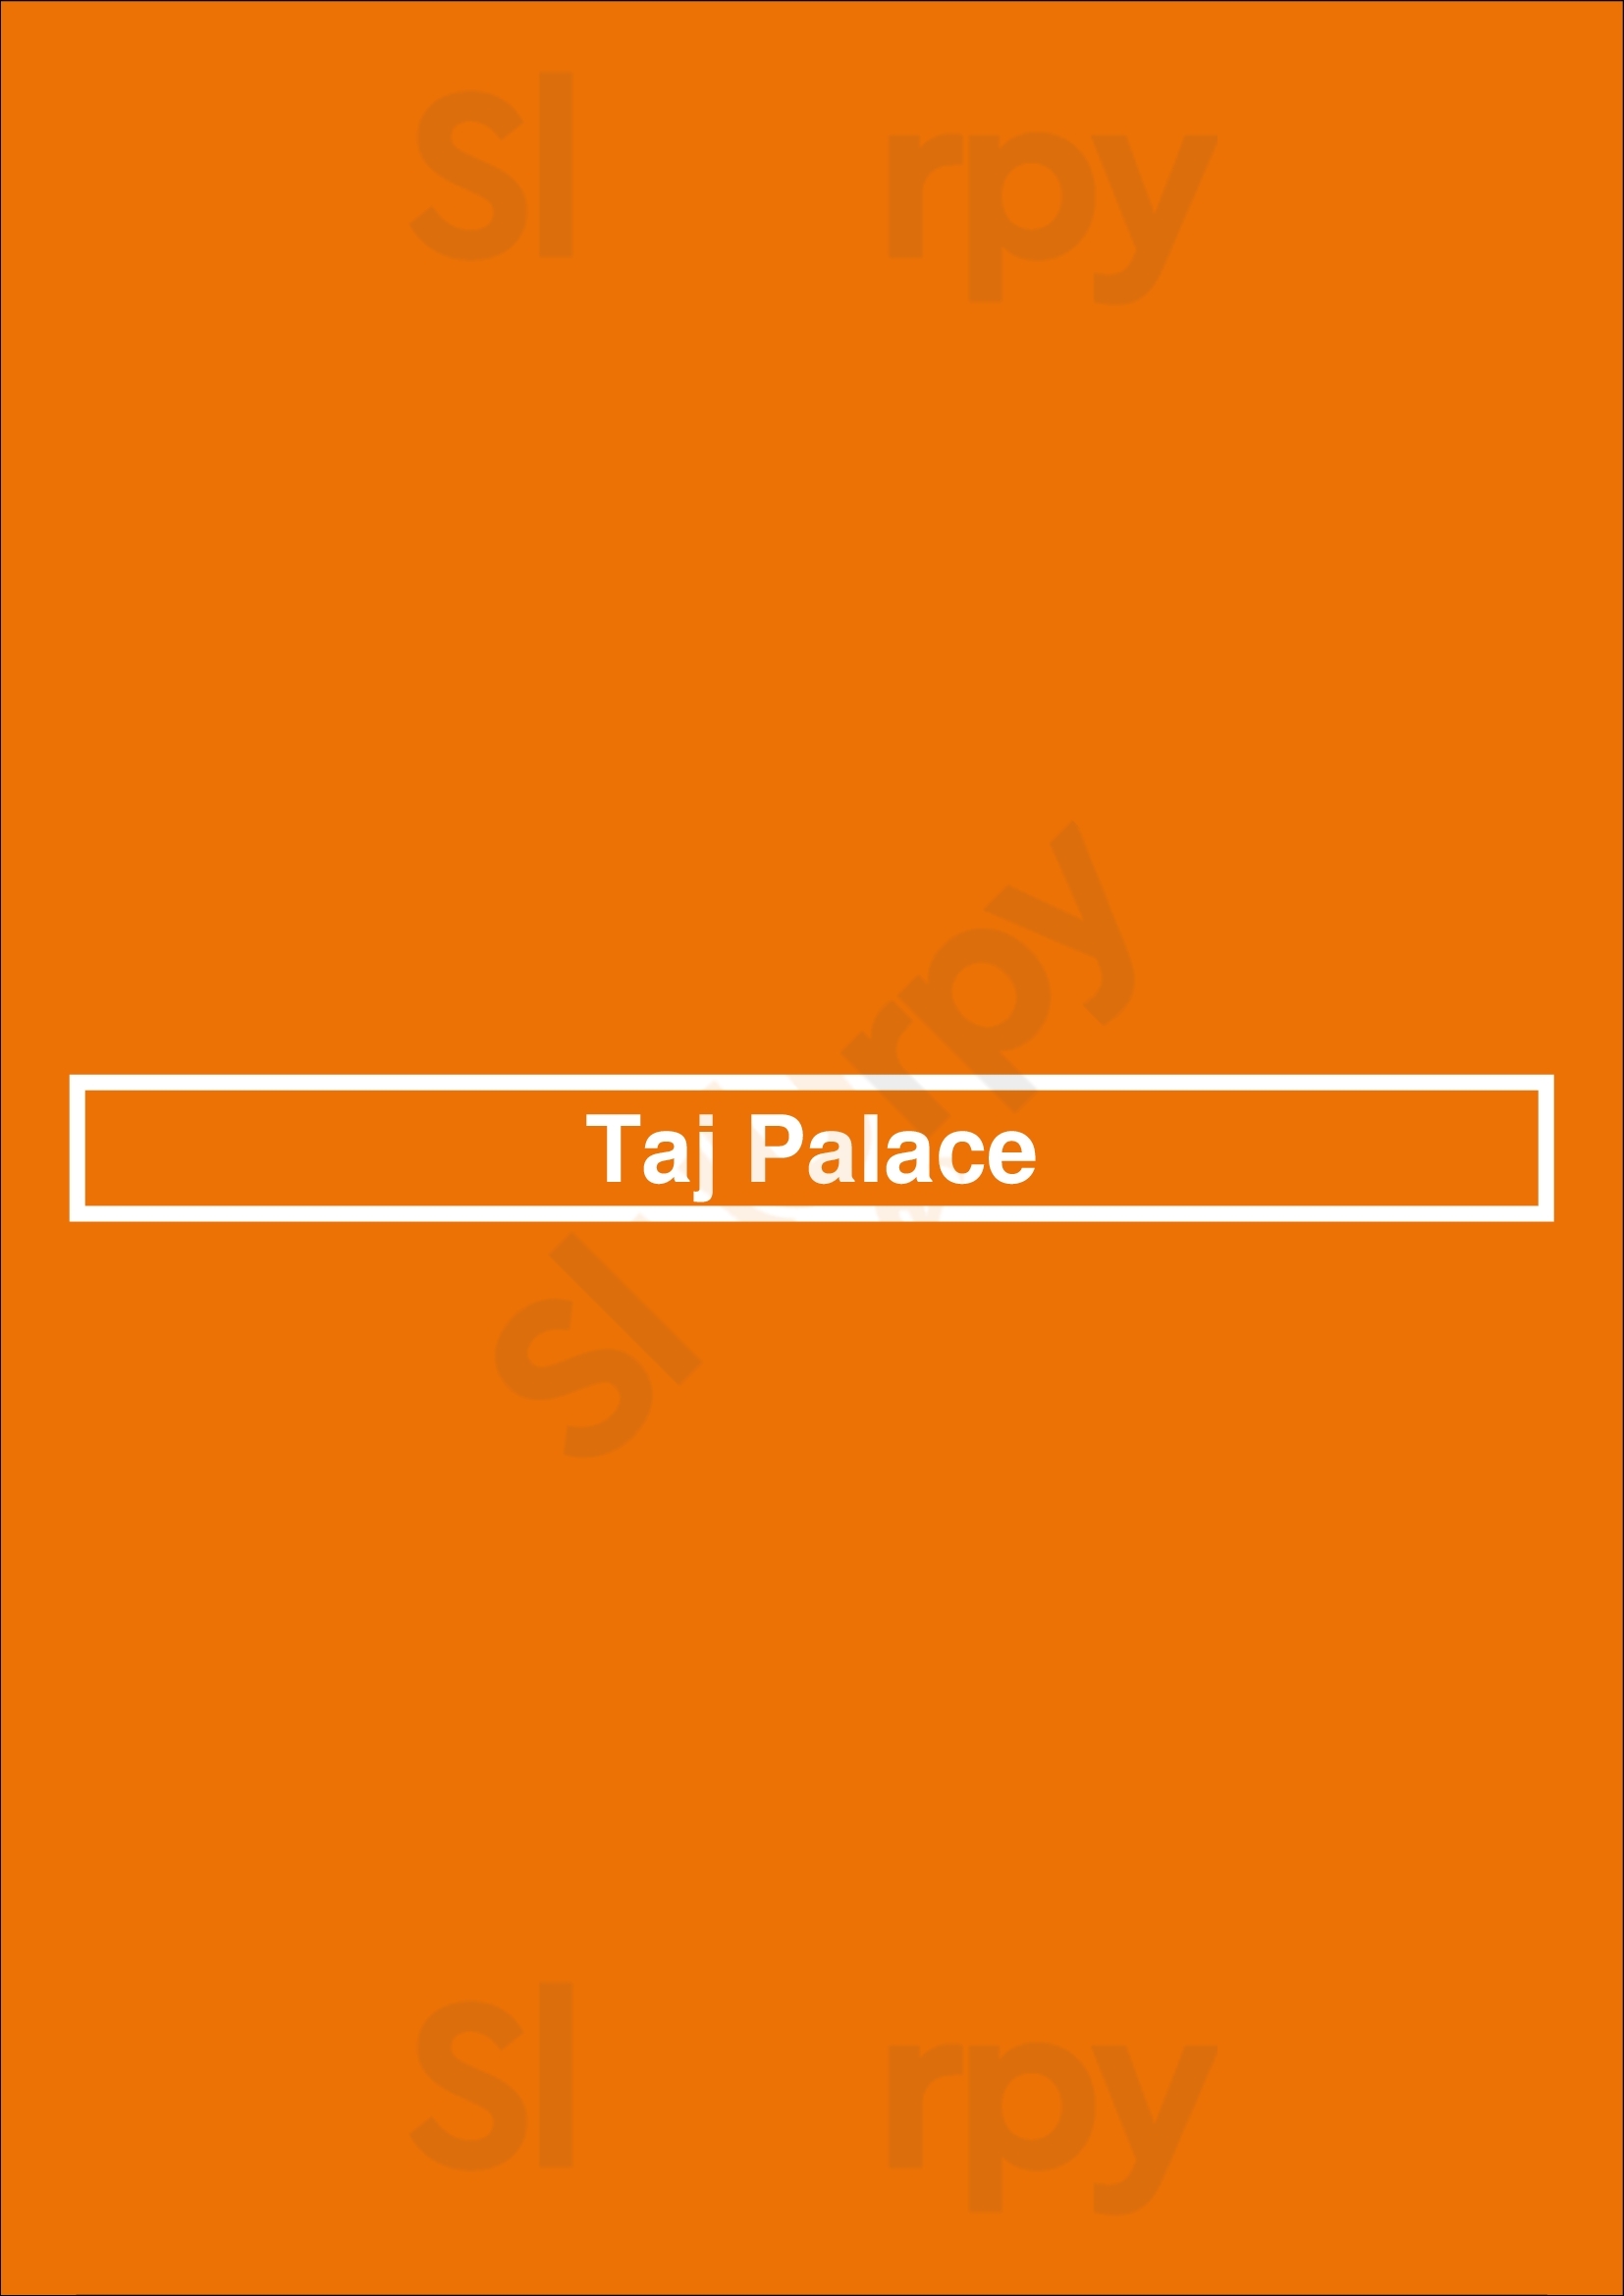 Taj Palace Los Angeles Menu - 1